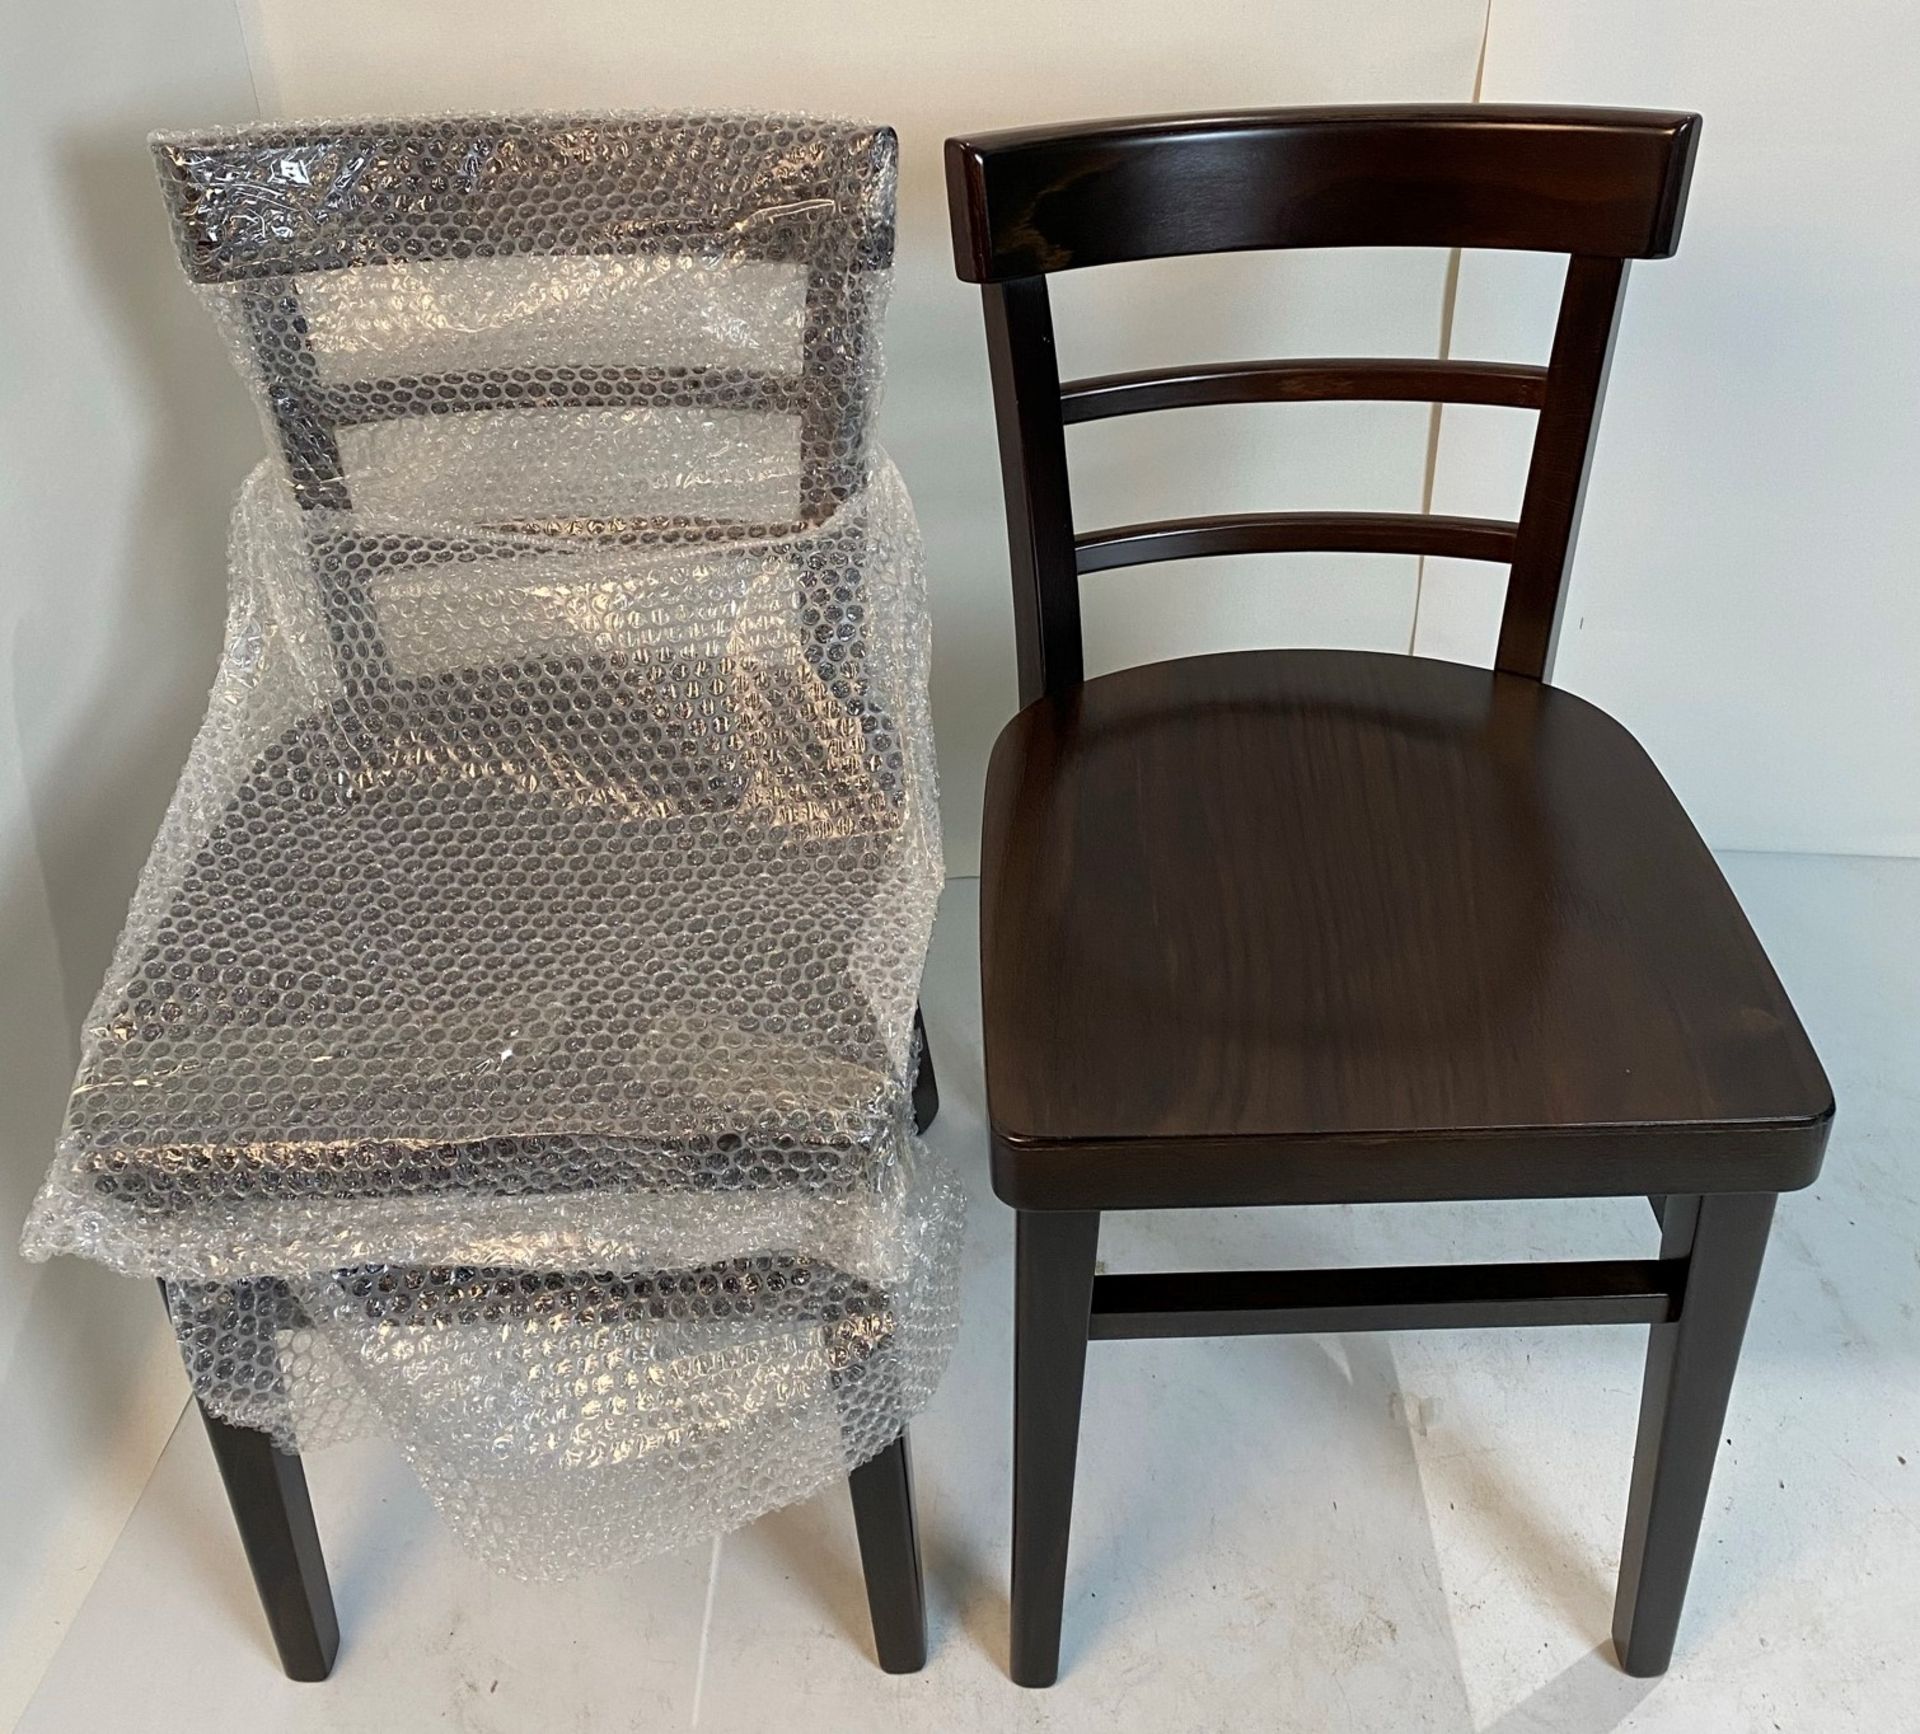 2 x Expresso Dark Walnut coloured side chairs